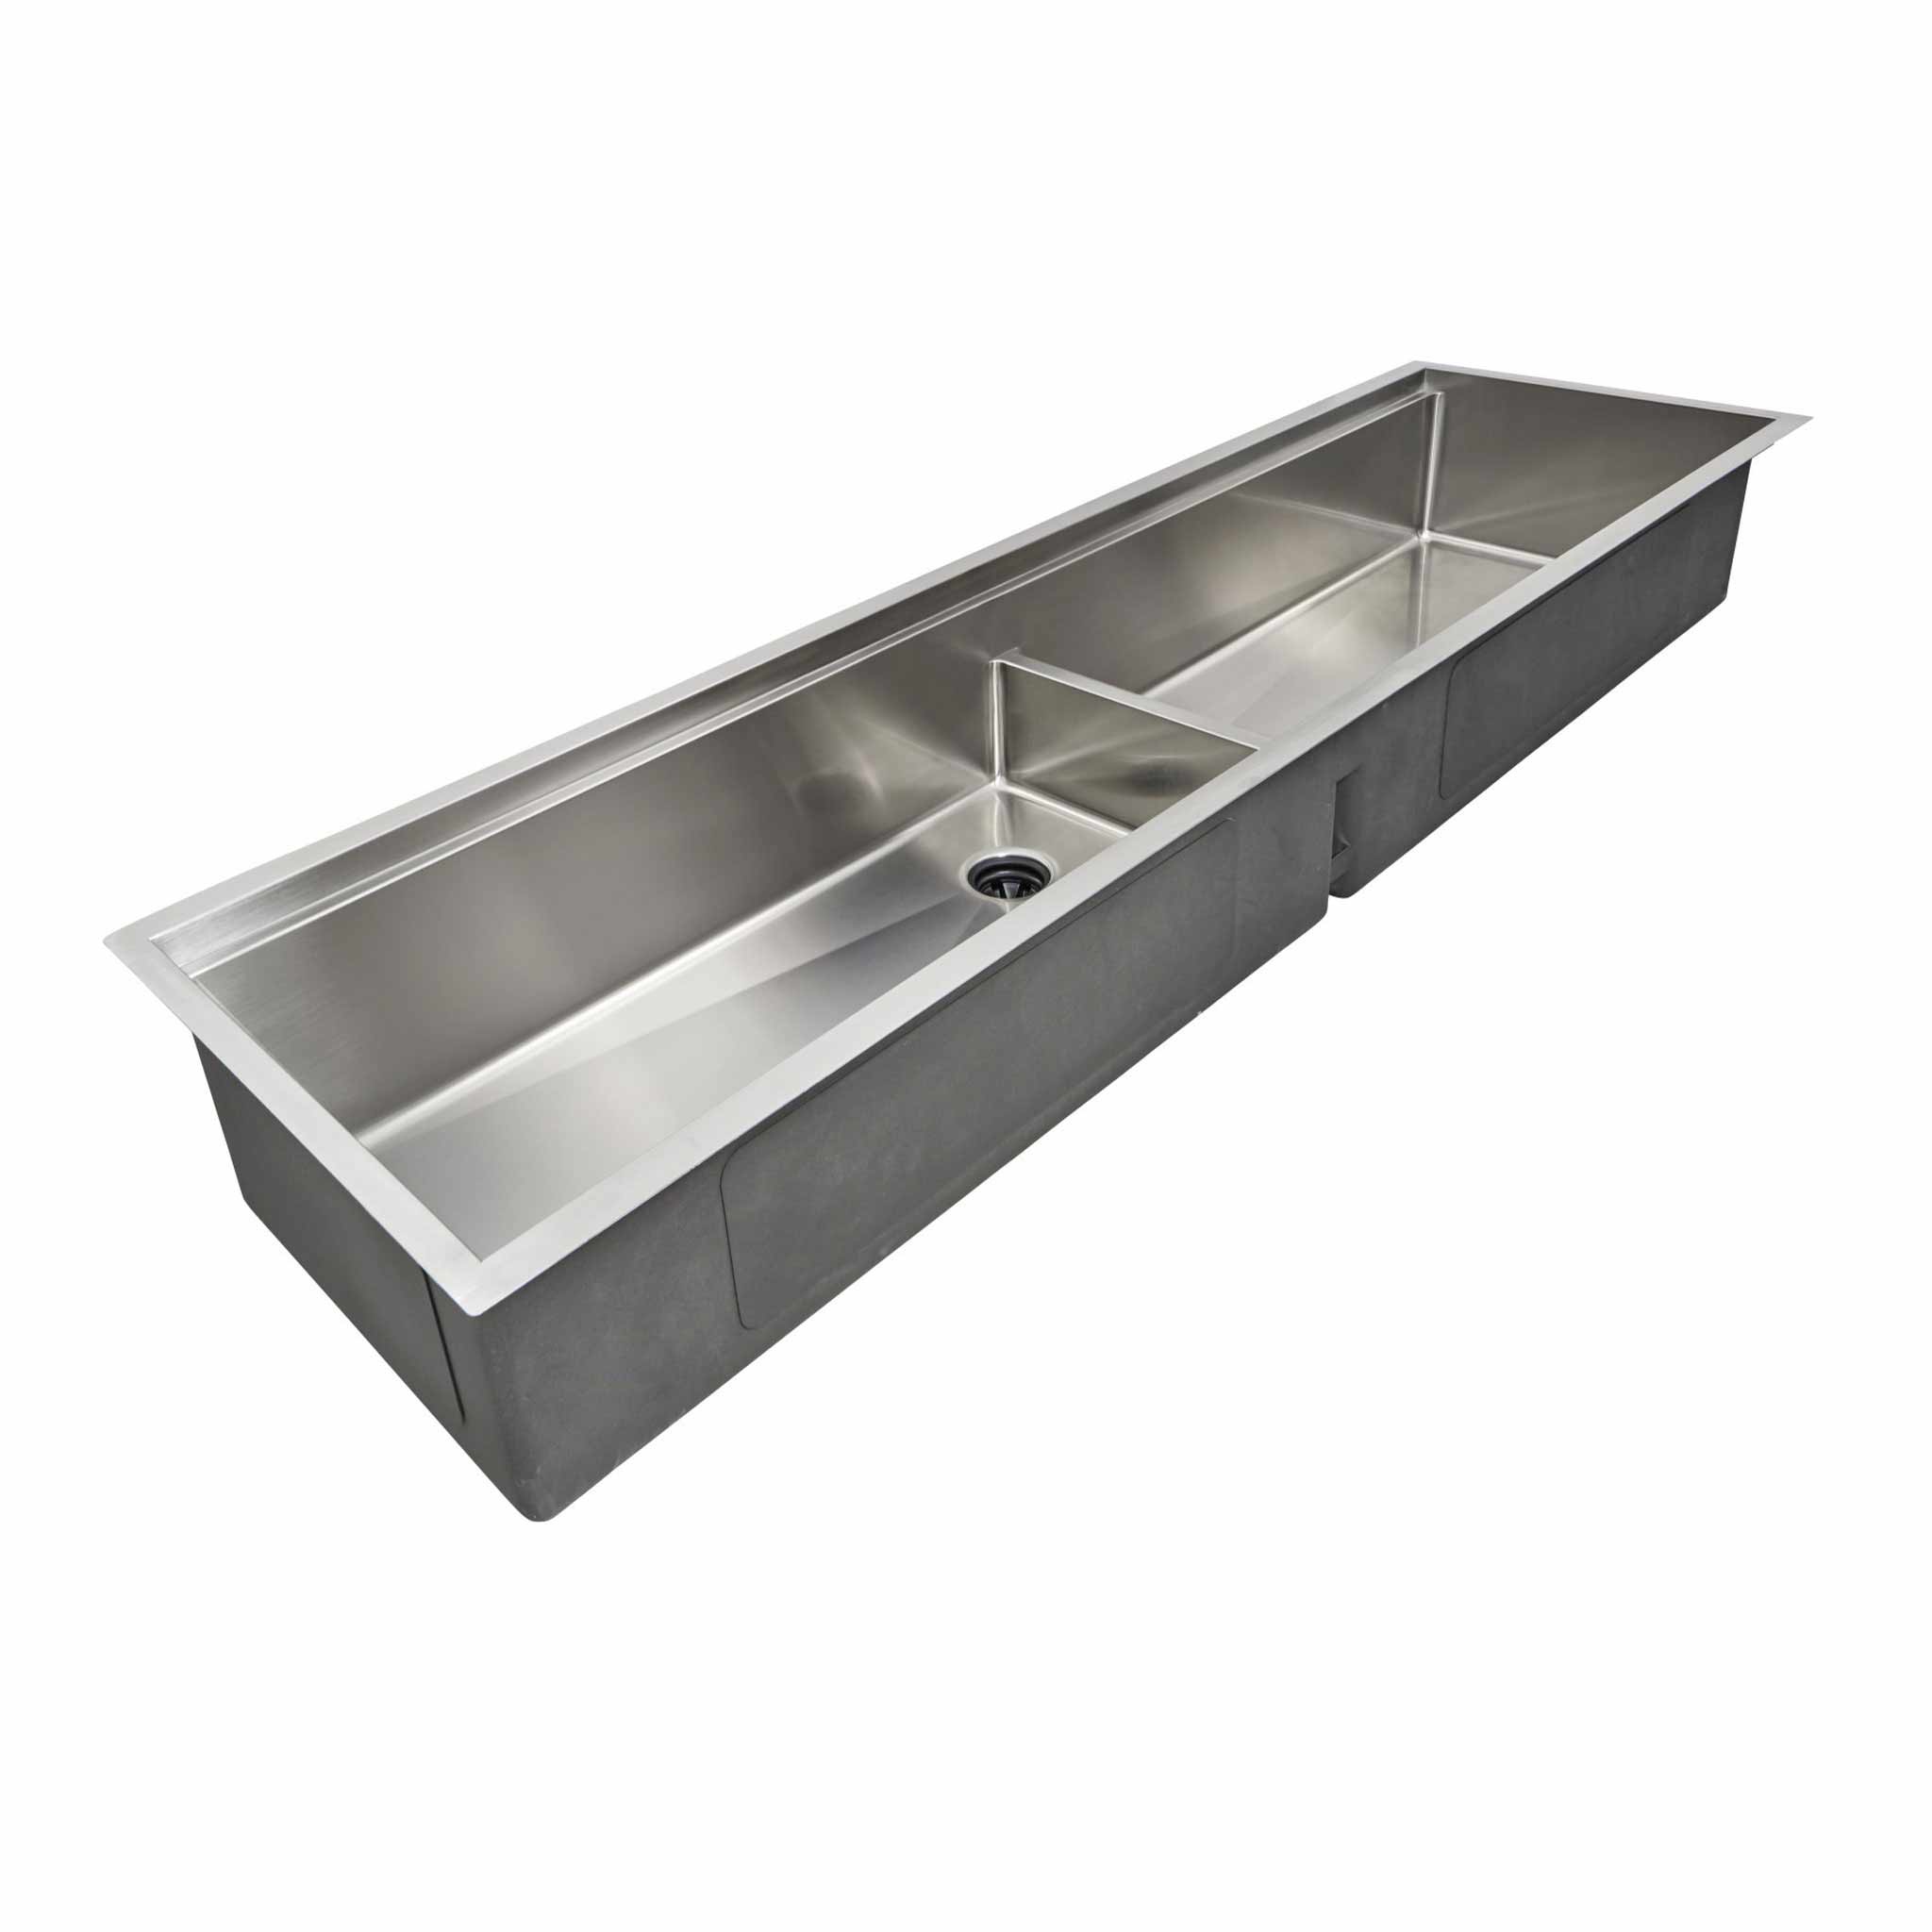 Stainless Steel Sink Accessories  Stainless Steel Kitchen Sinks -Aliexpress